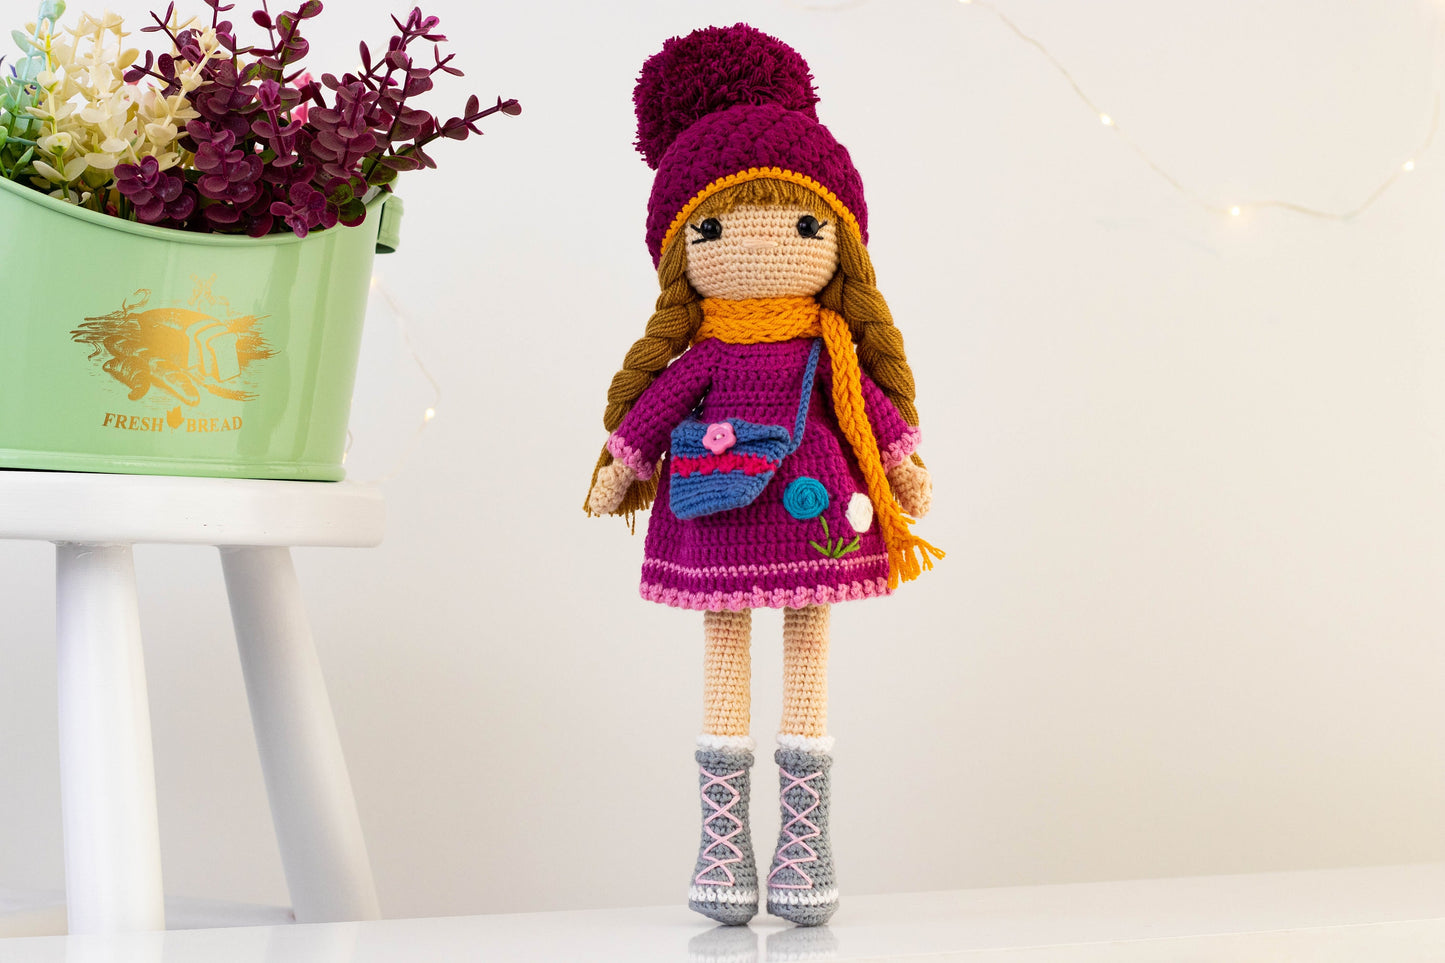 Crochet Doll, Winter Doll, Amigurumi Doll For Sale, Knit Doll, Handmade Doll Finished, Homemade Doll, Hand Made Doll, Hand Knit Doll, Gift